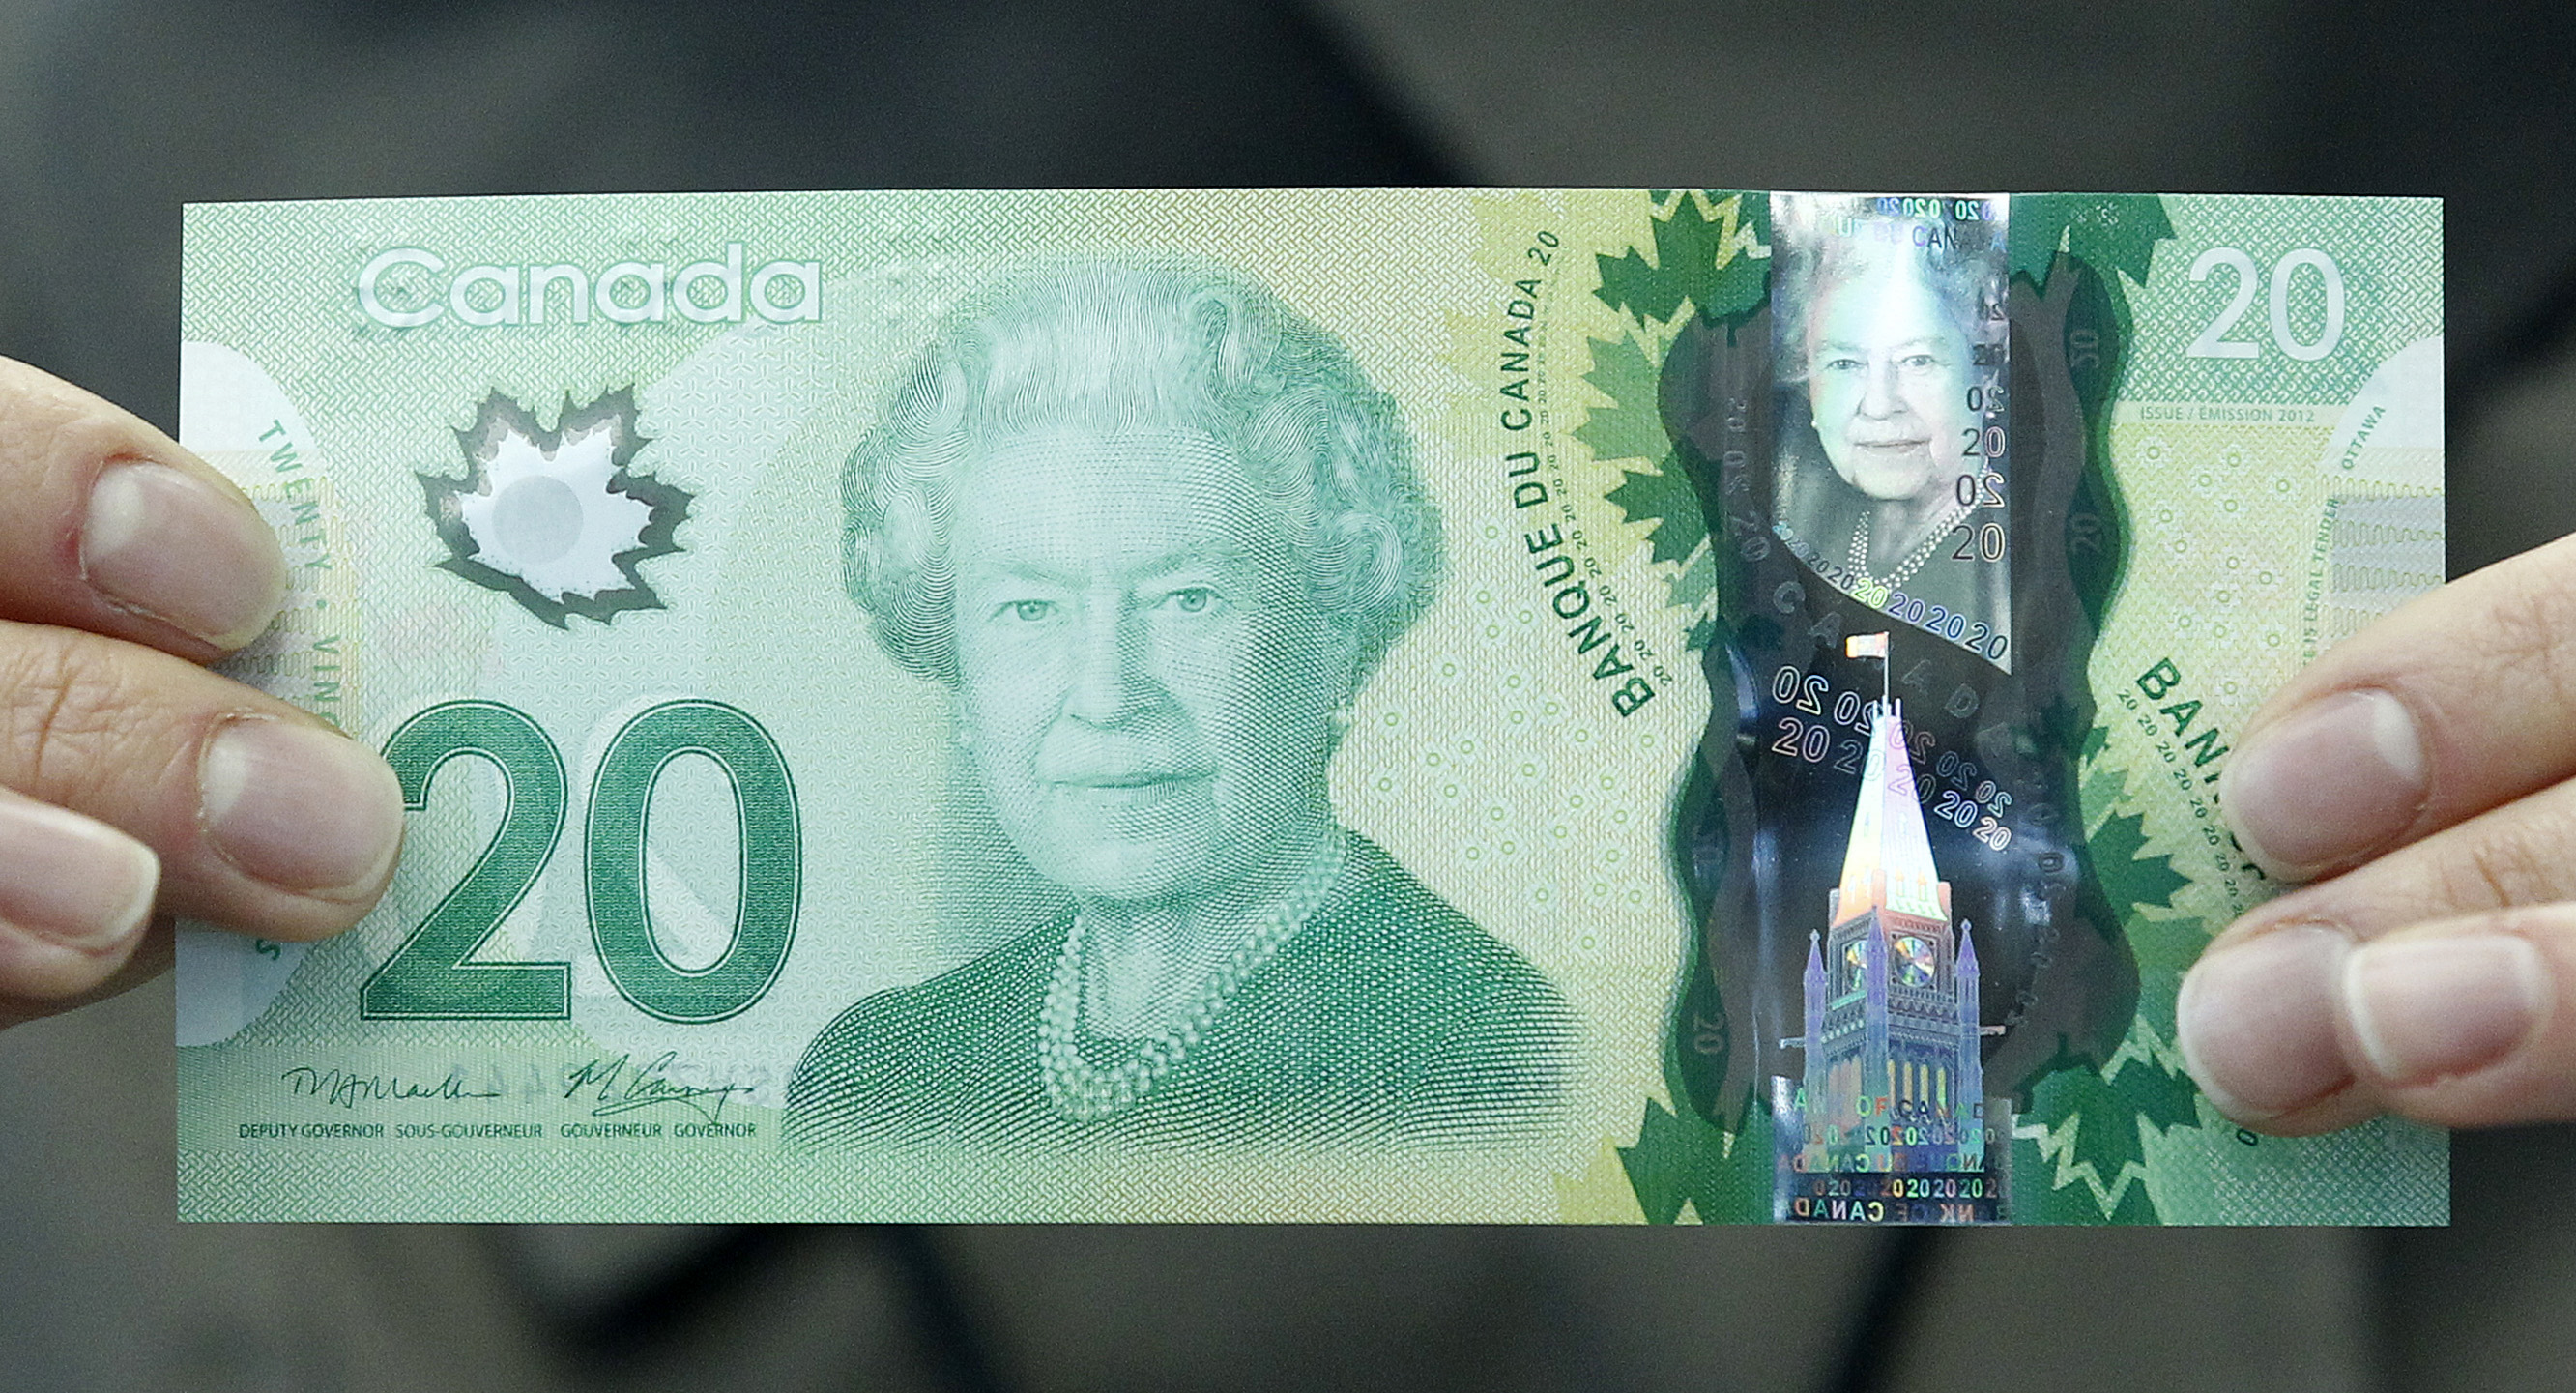 Canadian 20 dollar bill